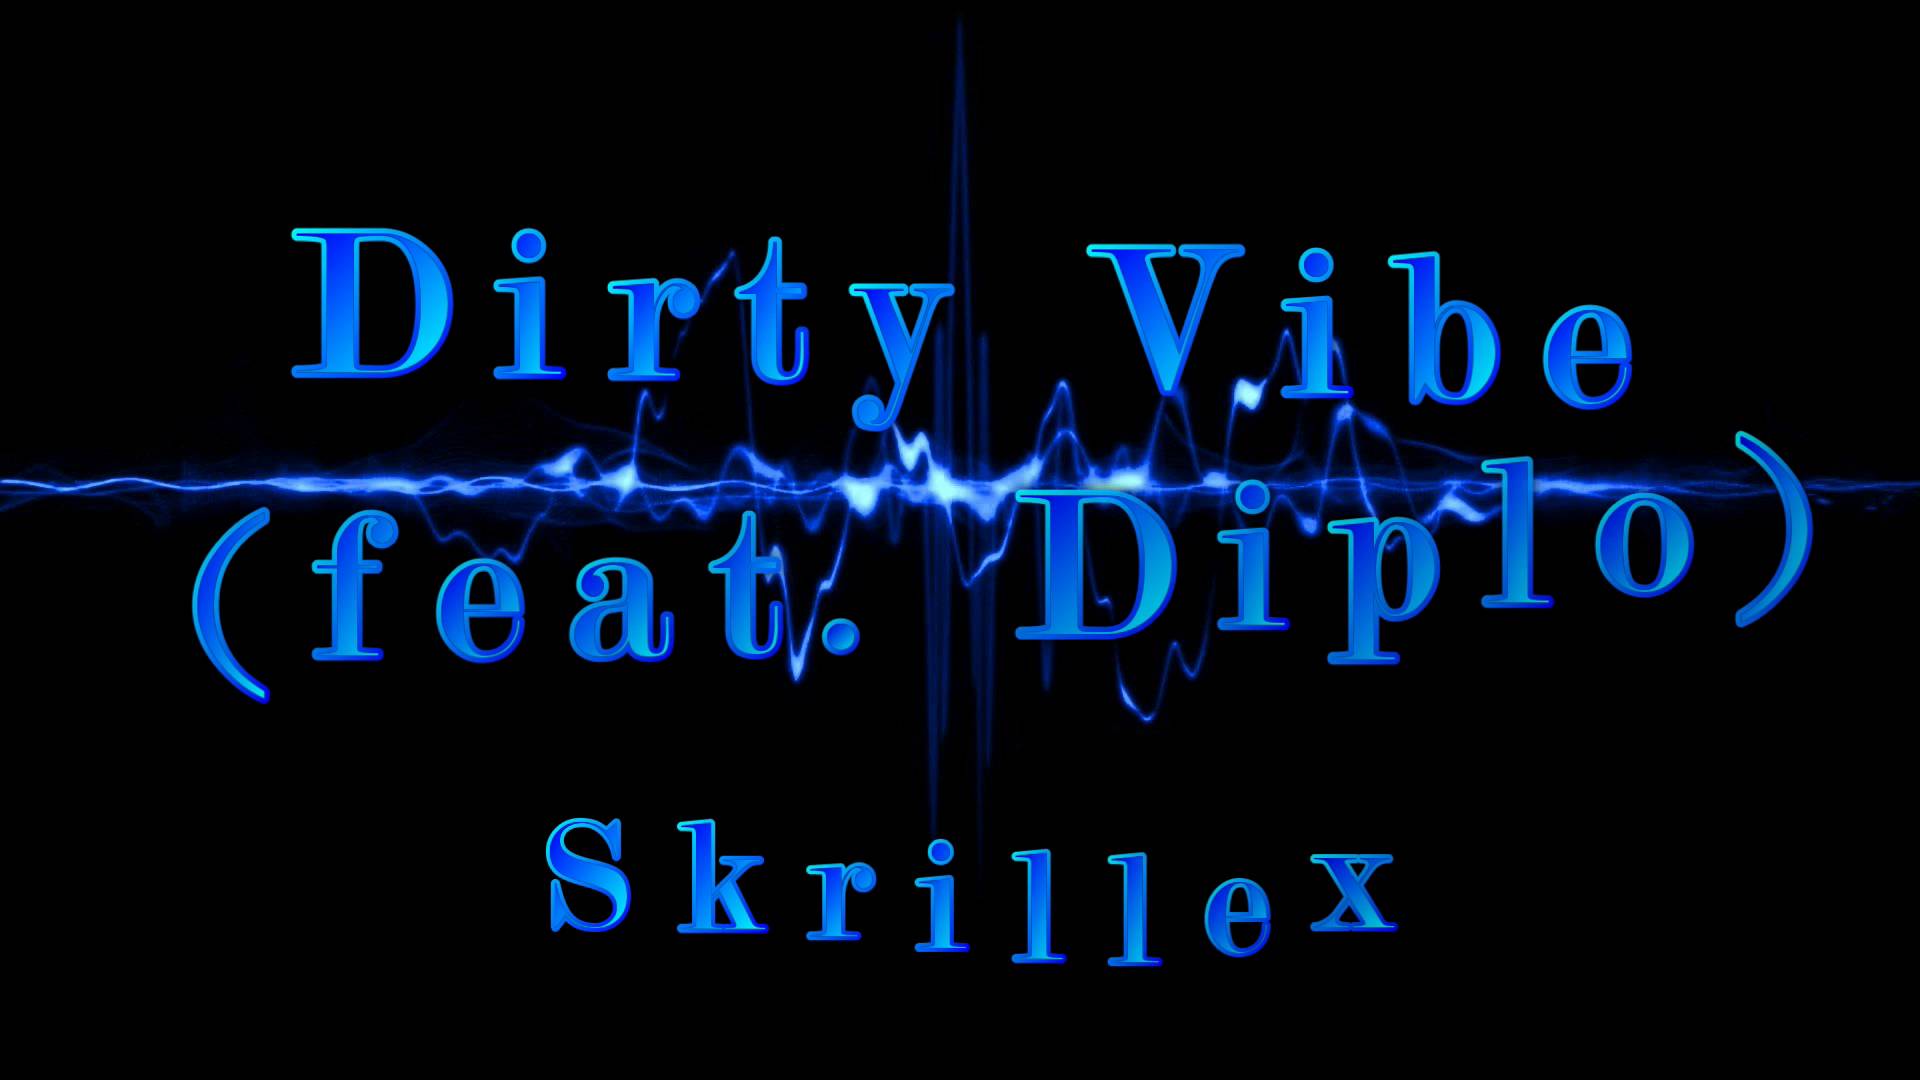 Vibe with me. G Dragon Dirty Vibe. Skrillex – Dirty Vibe (DJ Snake & Aazar Remix). Dirty Vibe.